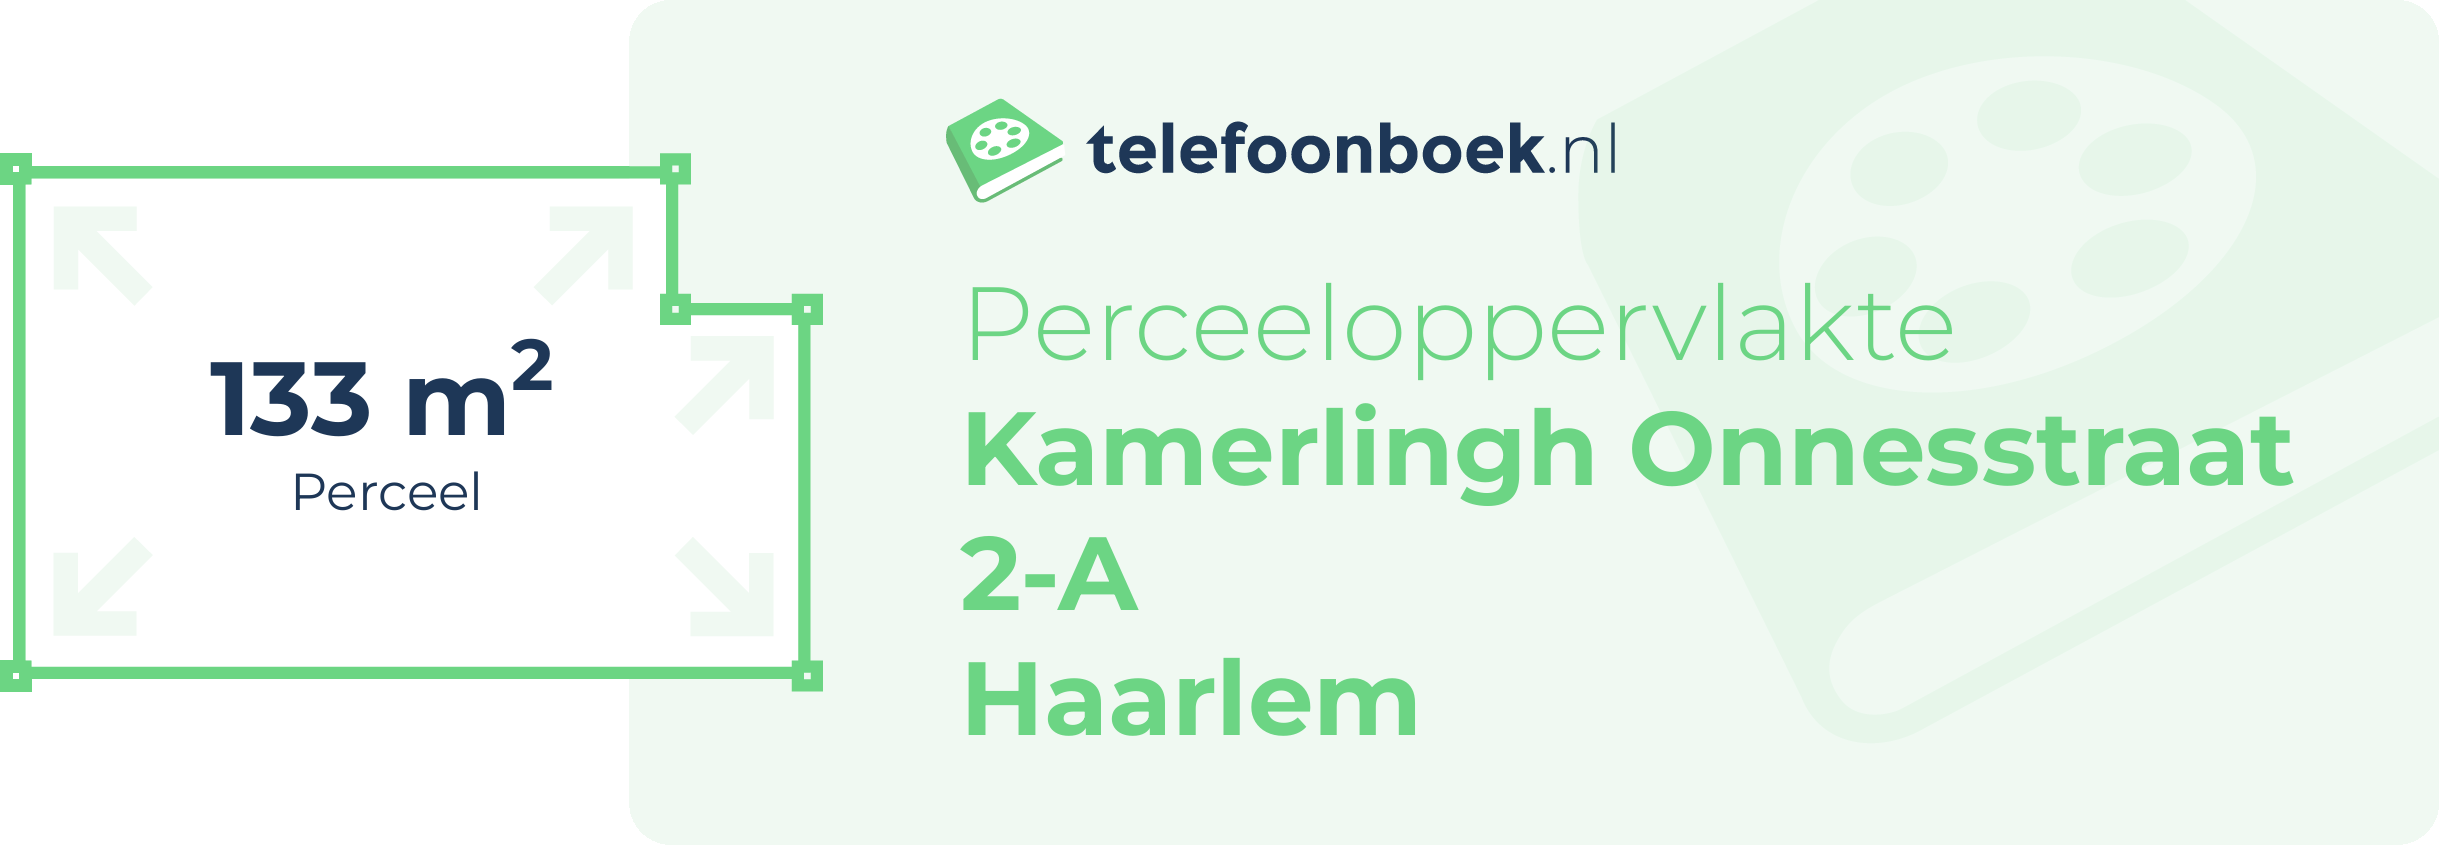 Perceeloppervlakte Kamerlingh Onnesstraat 2-A Haarlem